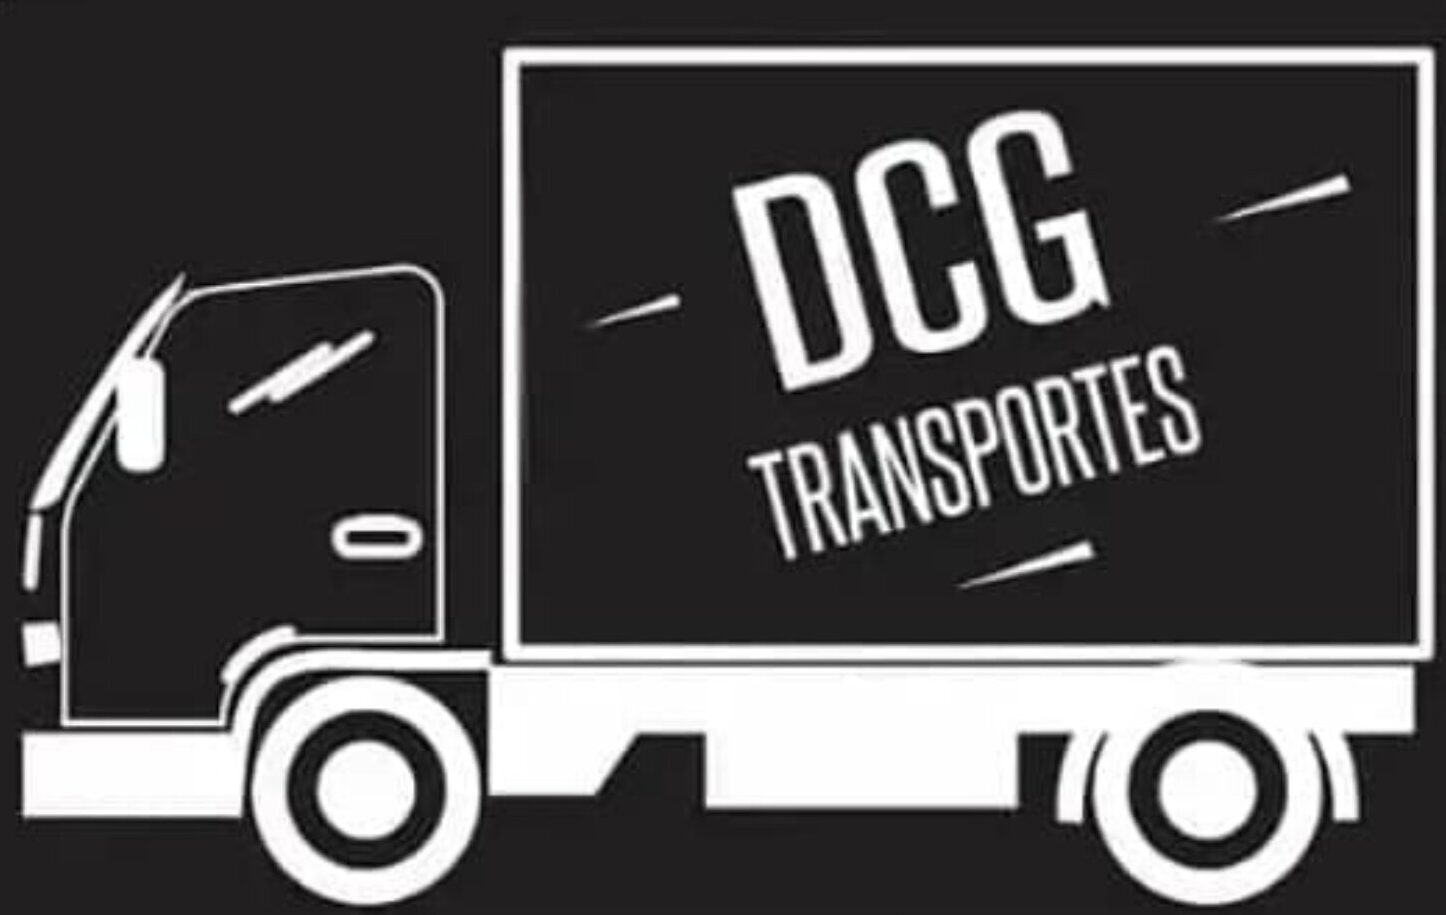 www.dcgtransportes.com.br